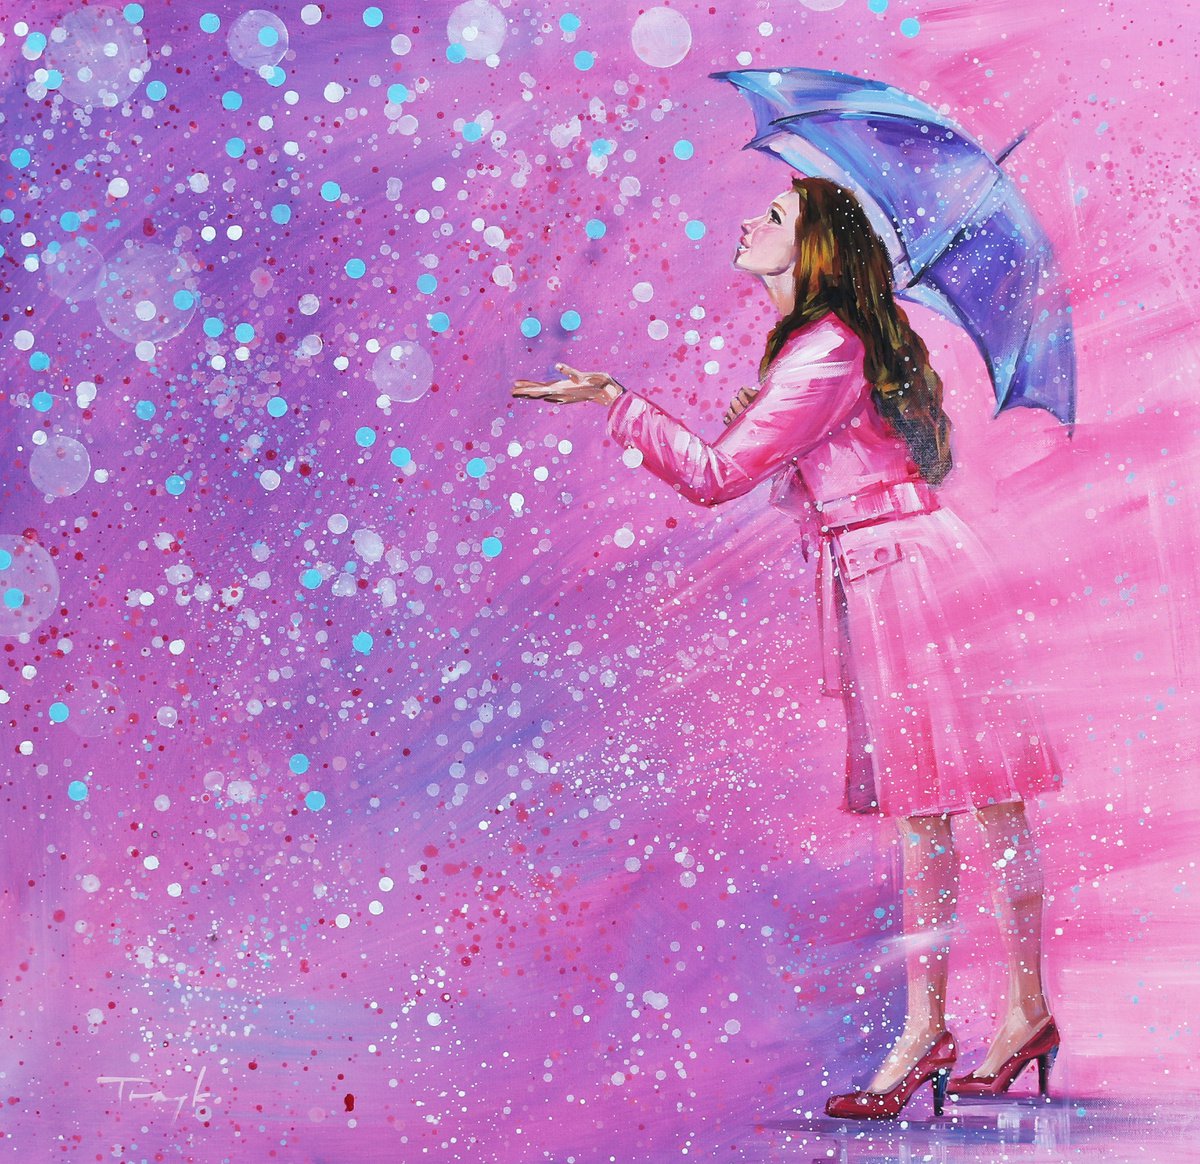 Spring Rain. Umbrella. Raining. by Trayko Popov